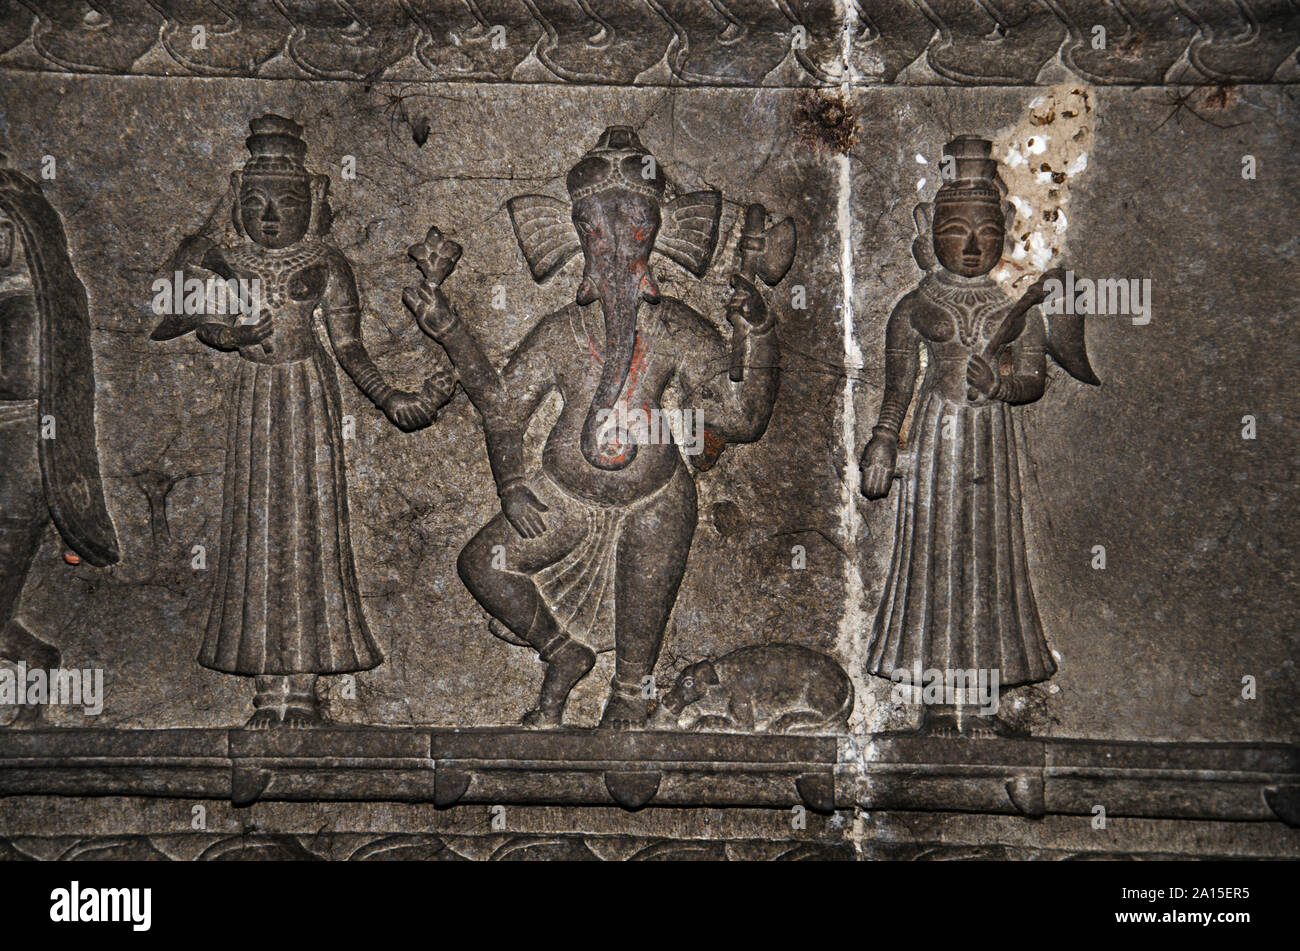 Carving details on the ceiling panel, inside the Vitthal Rukhmini Temple at Palashi, Parner, Maharashtra, India Stock Photo